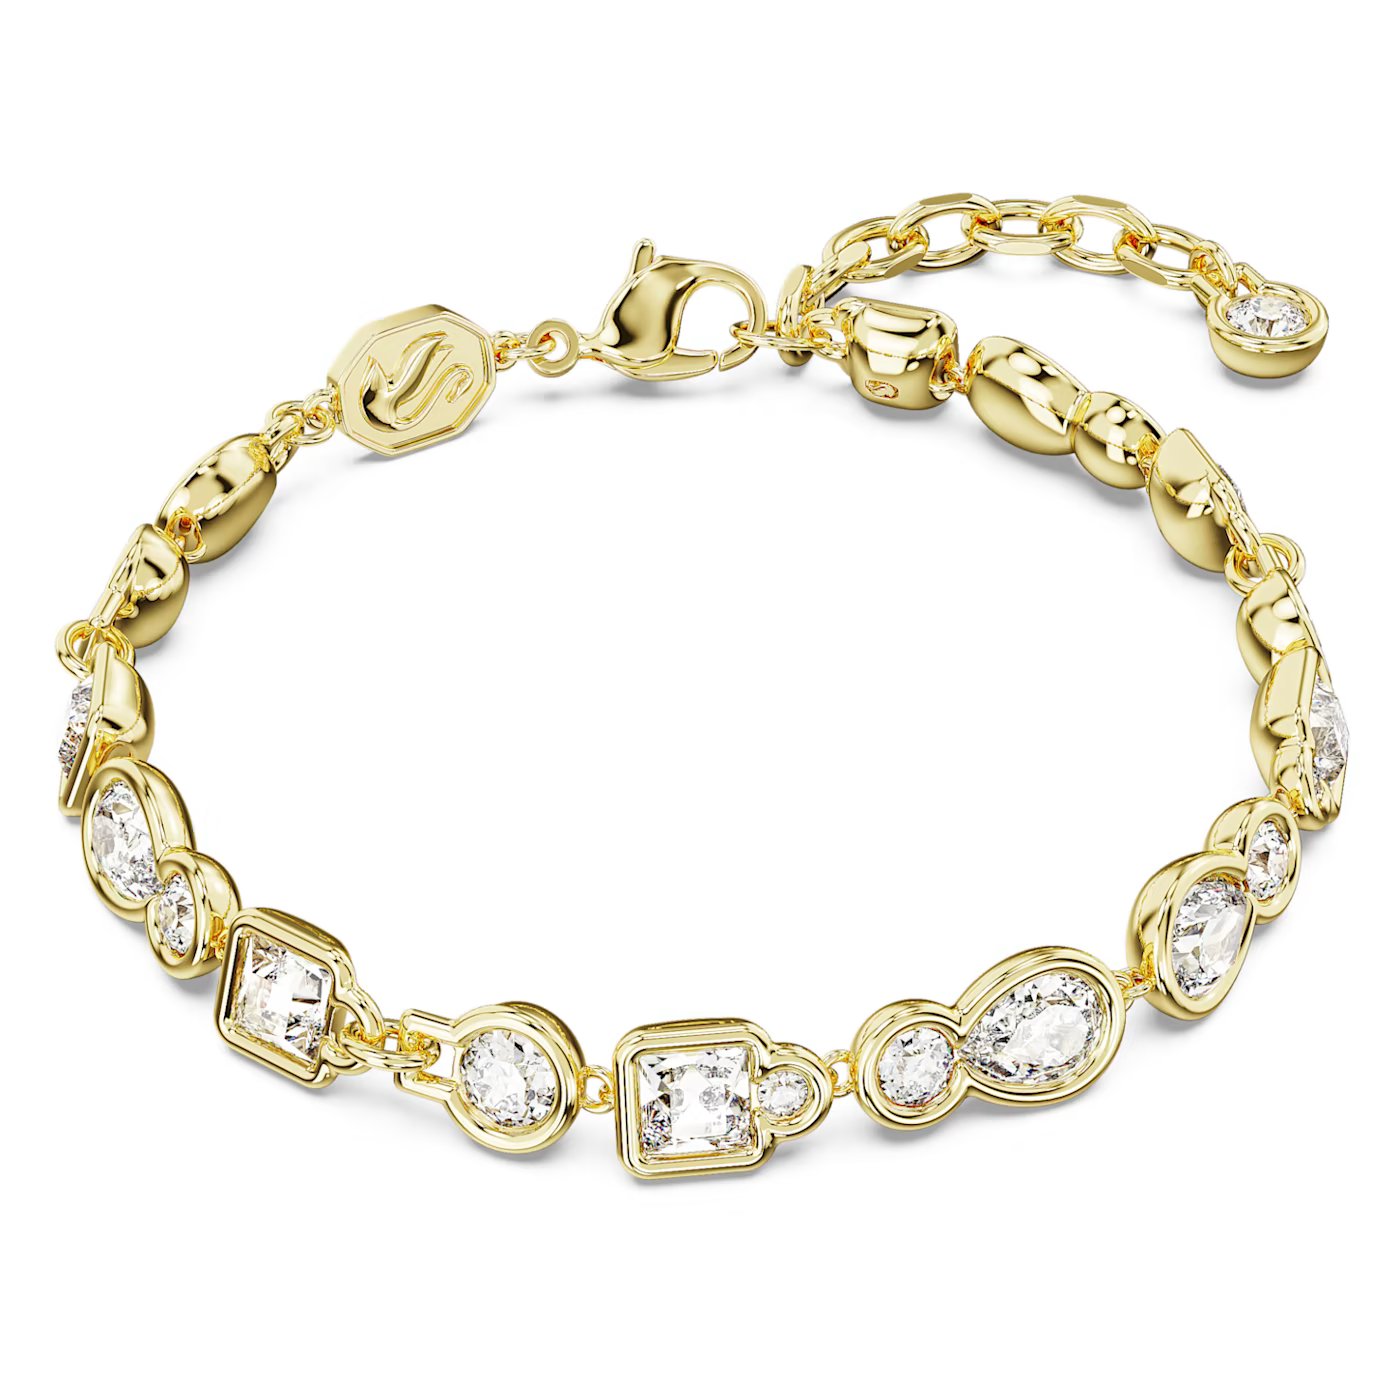 64dca9213fbd3_dextera-bracelet--mixed-cuts--white--gold-tone-plated-swarovski-5667044.jpg